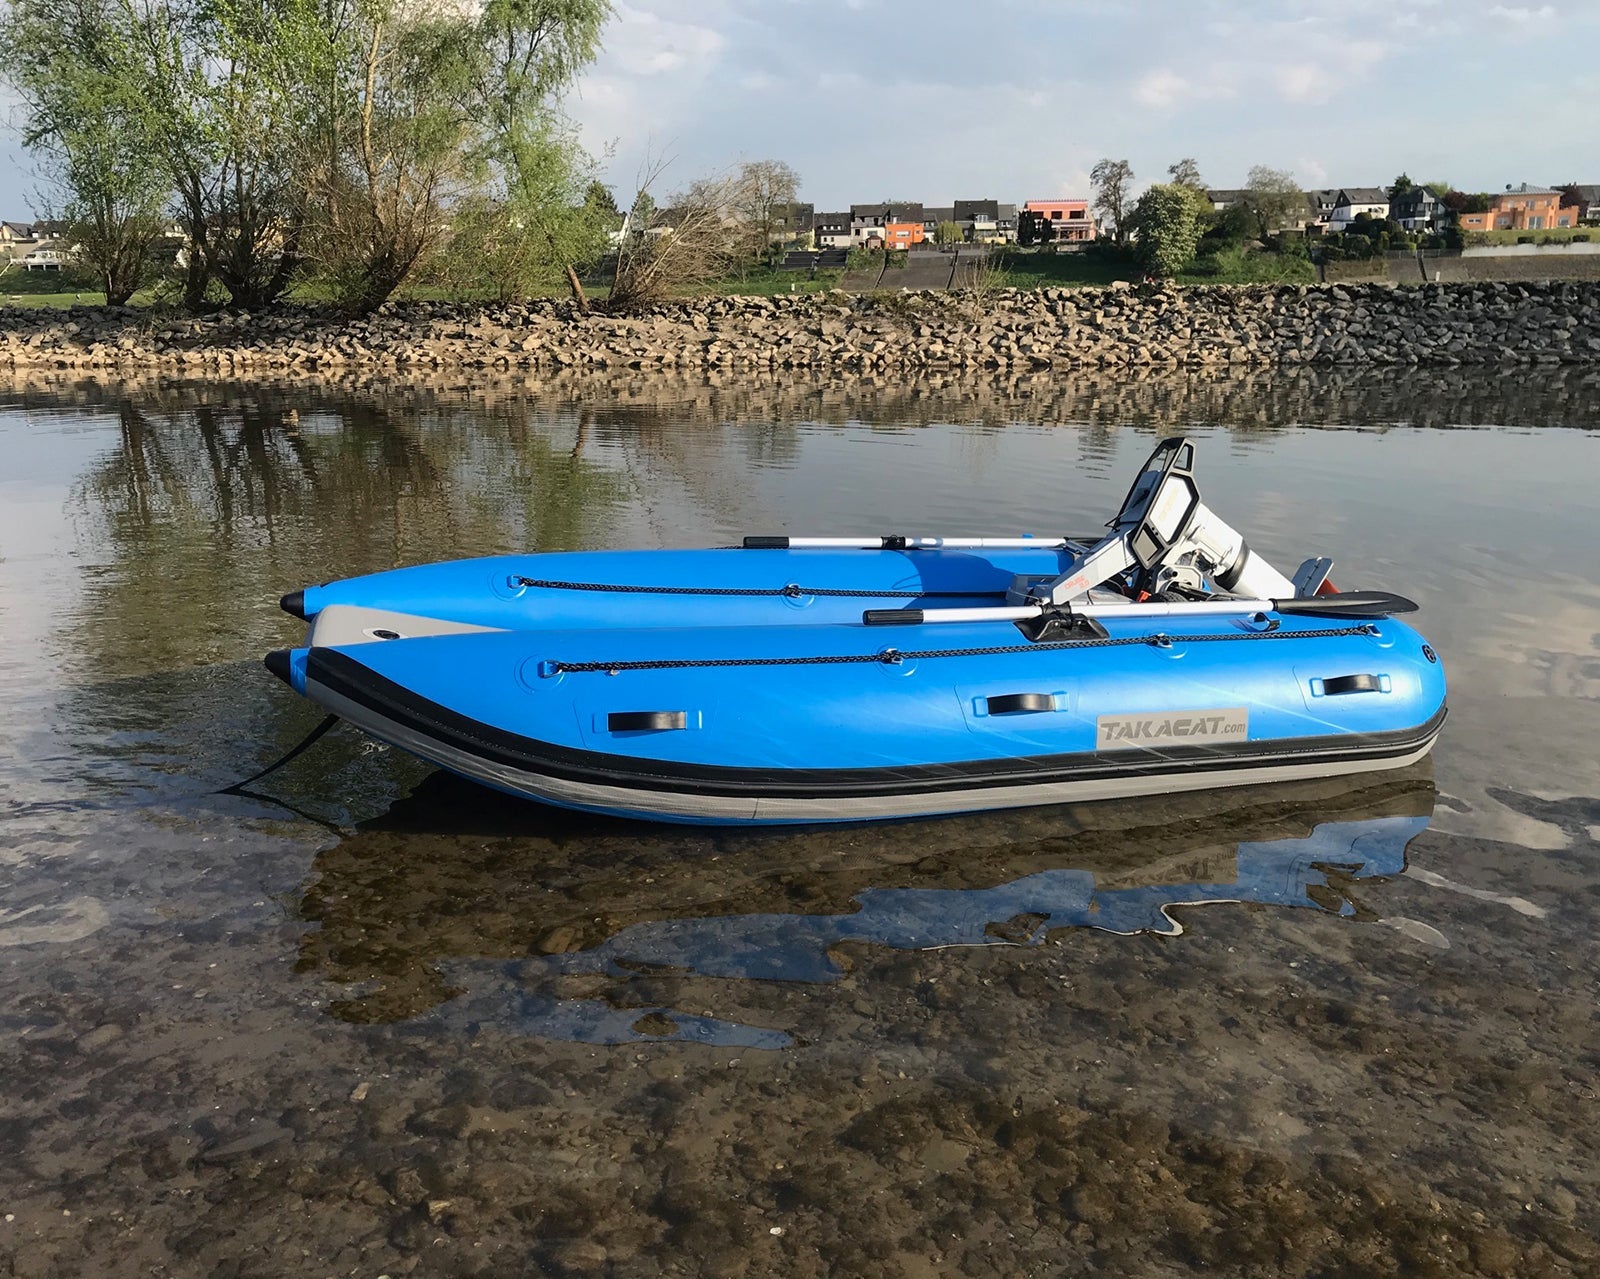 Takacat 340 LX Inflatable Catamaran